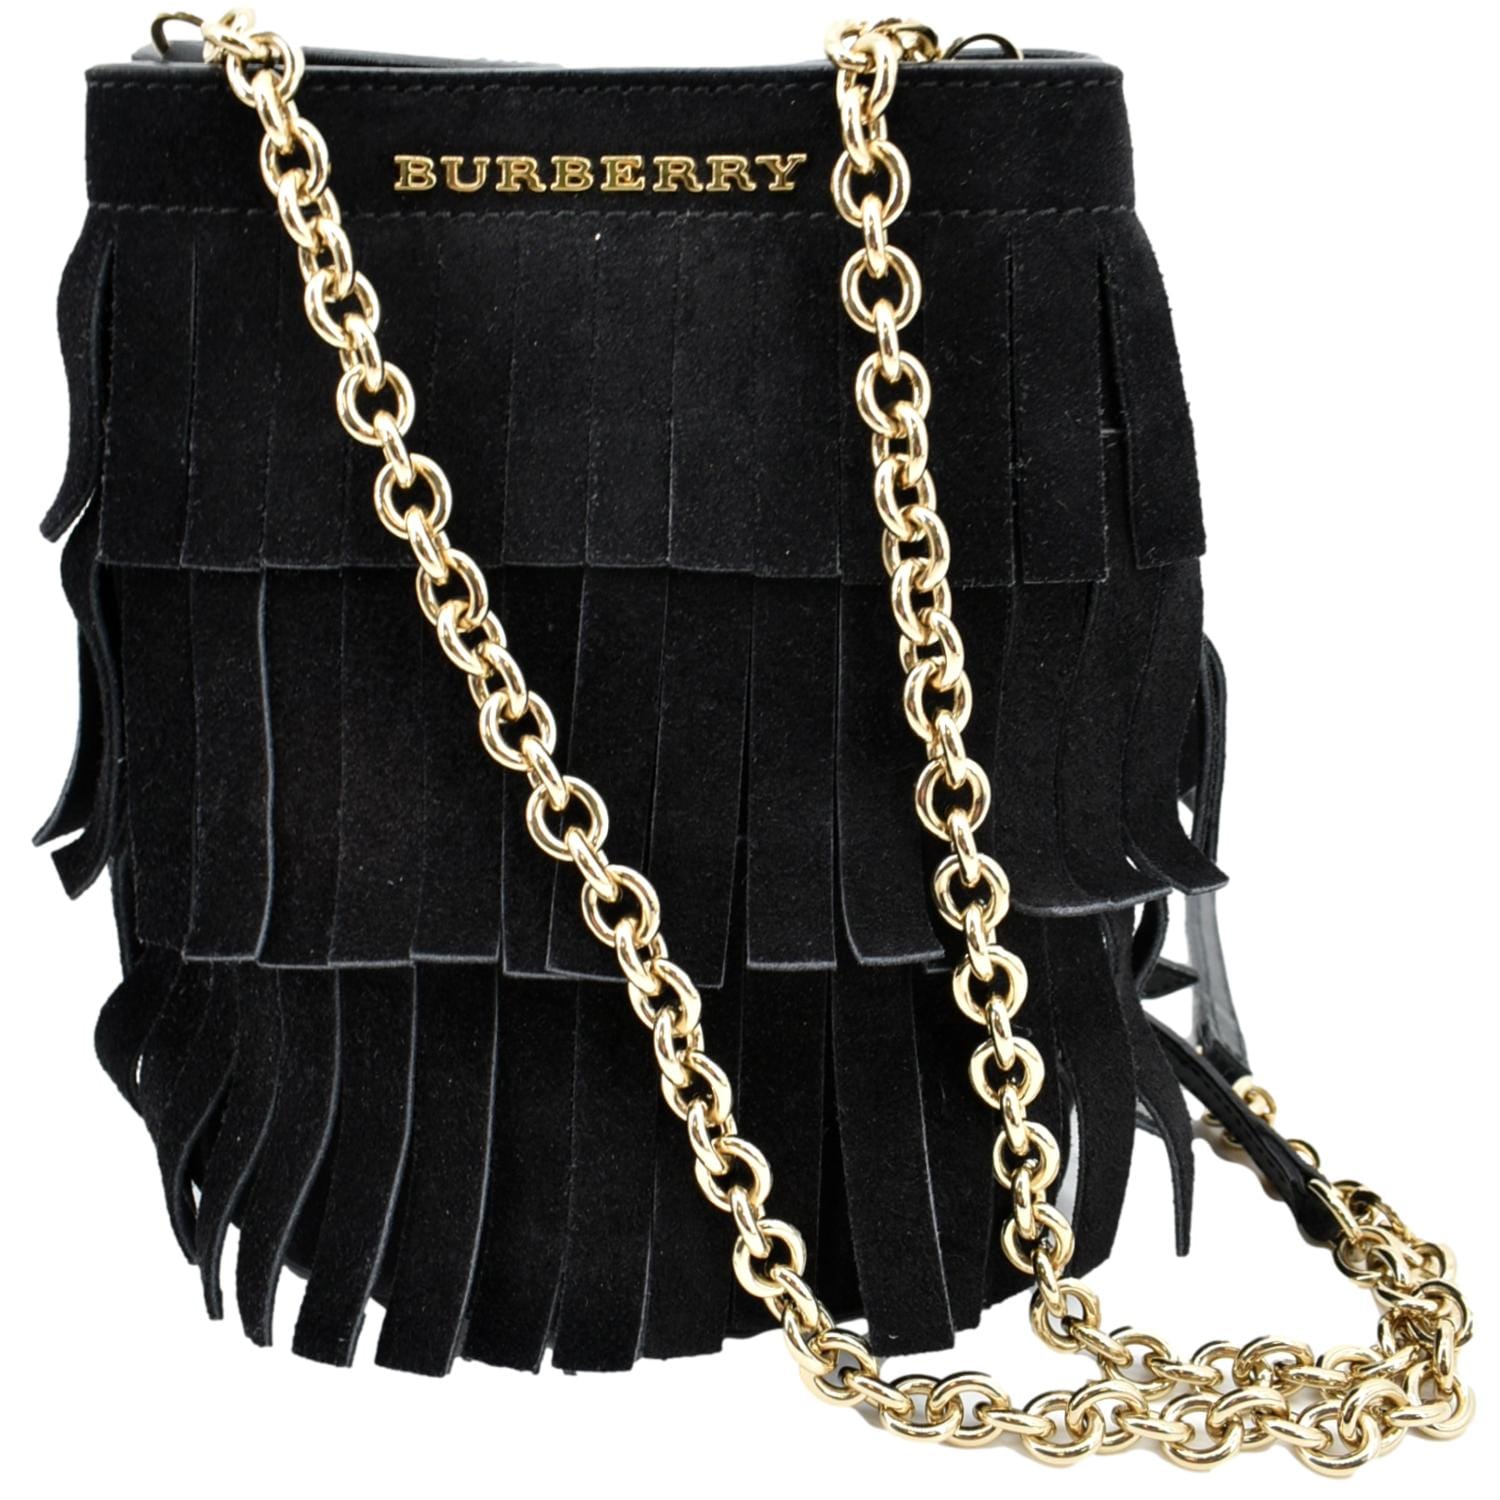 Burberry Mini Fringe Suede Crossbody Bucket Bag in Black